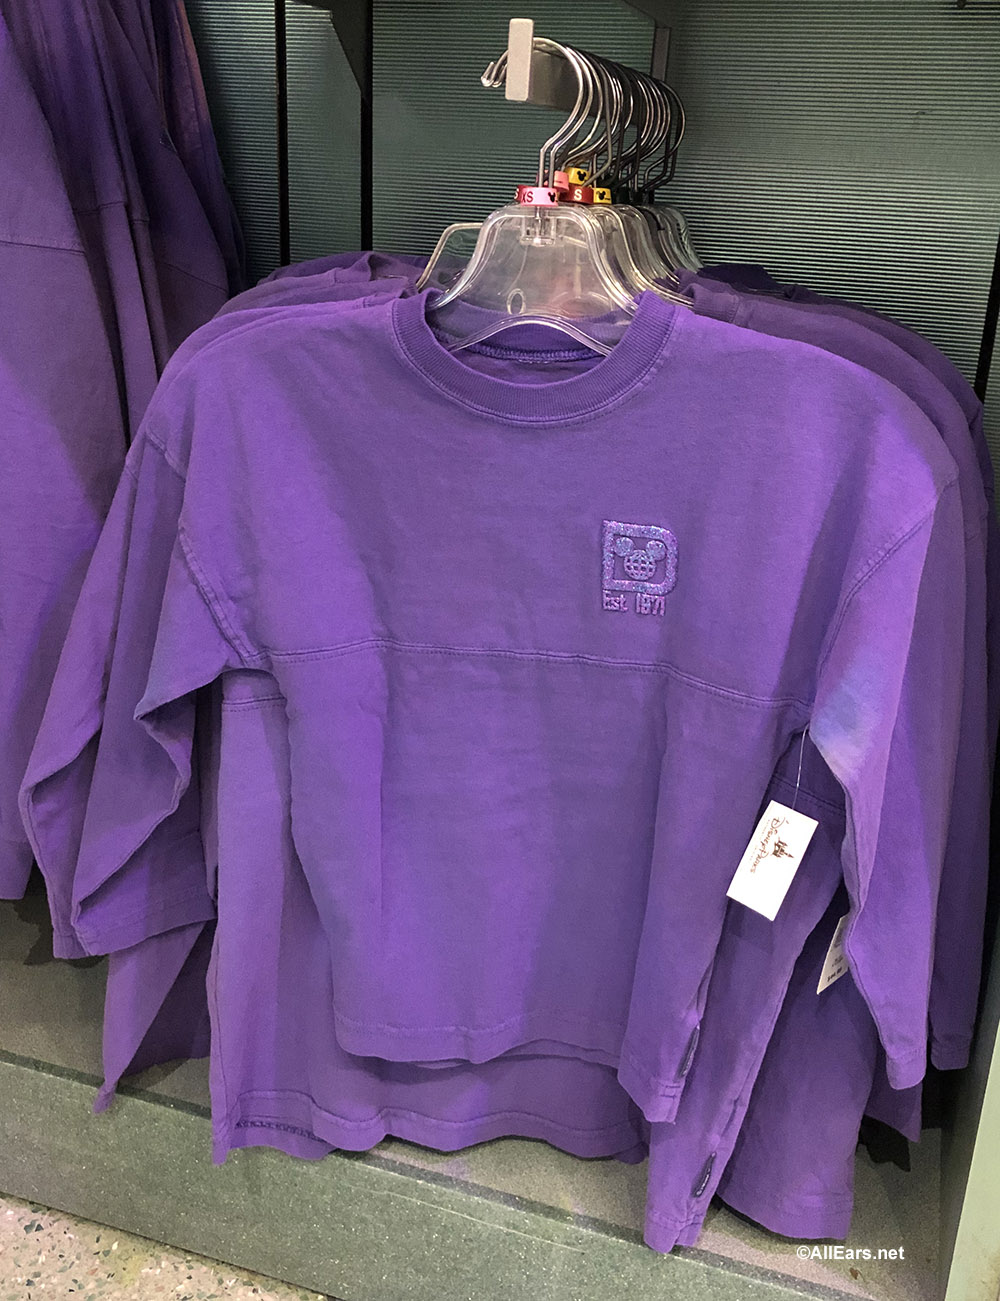 purple spirit jersey disney